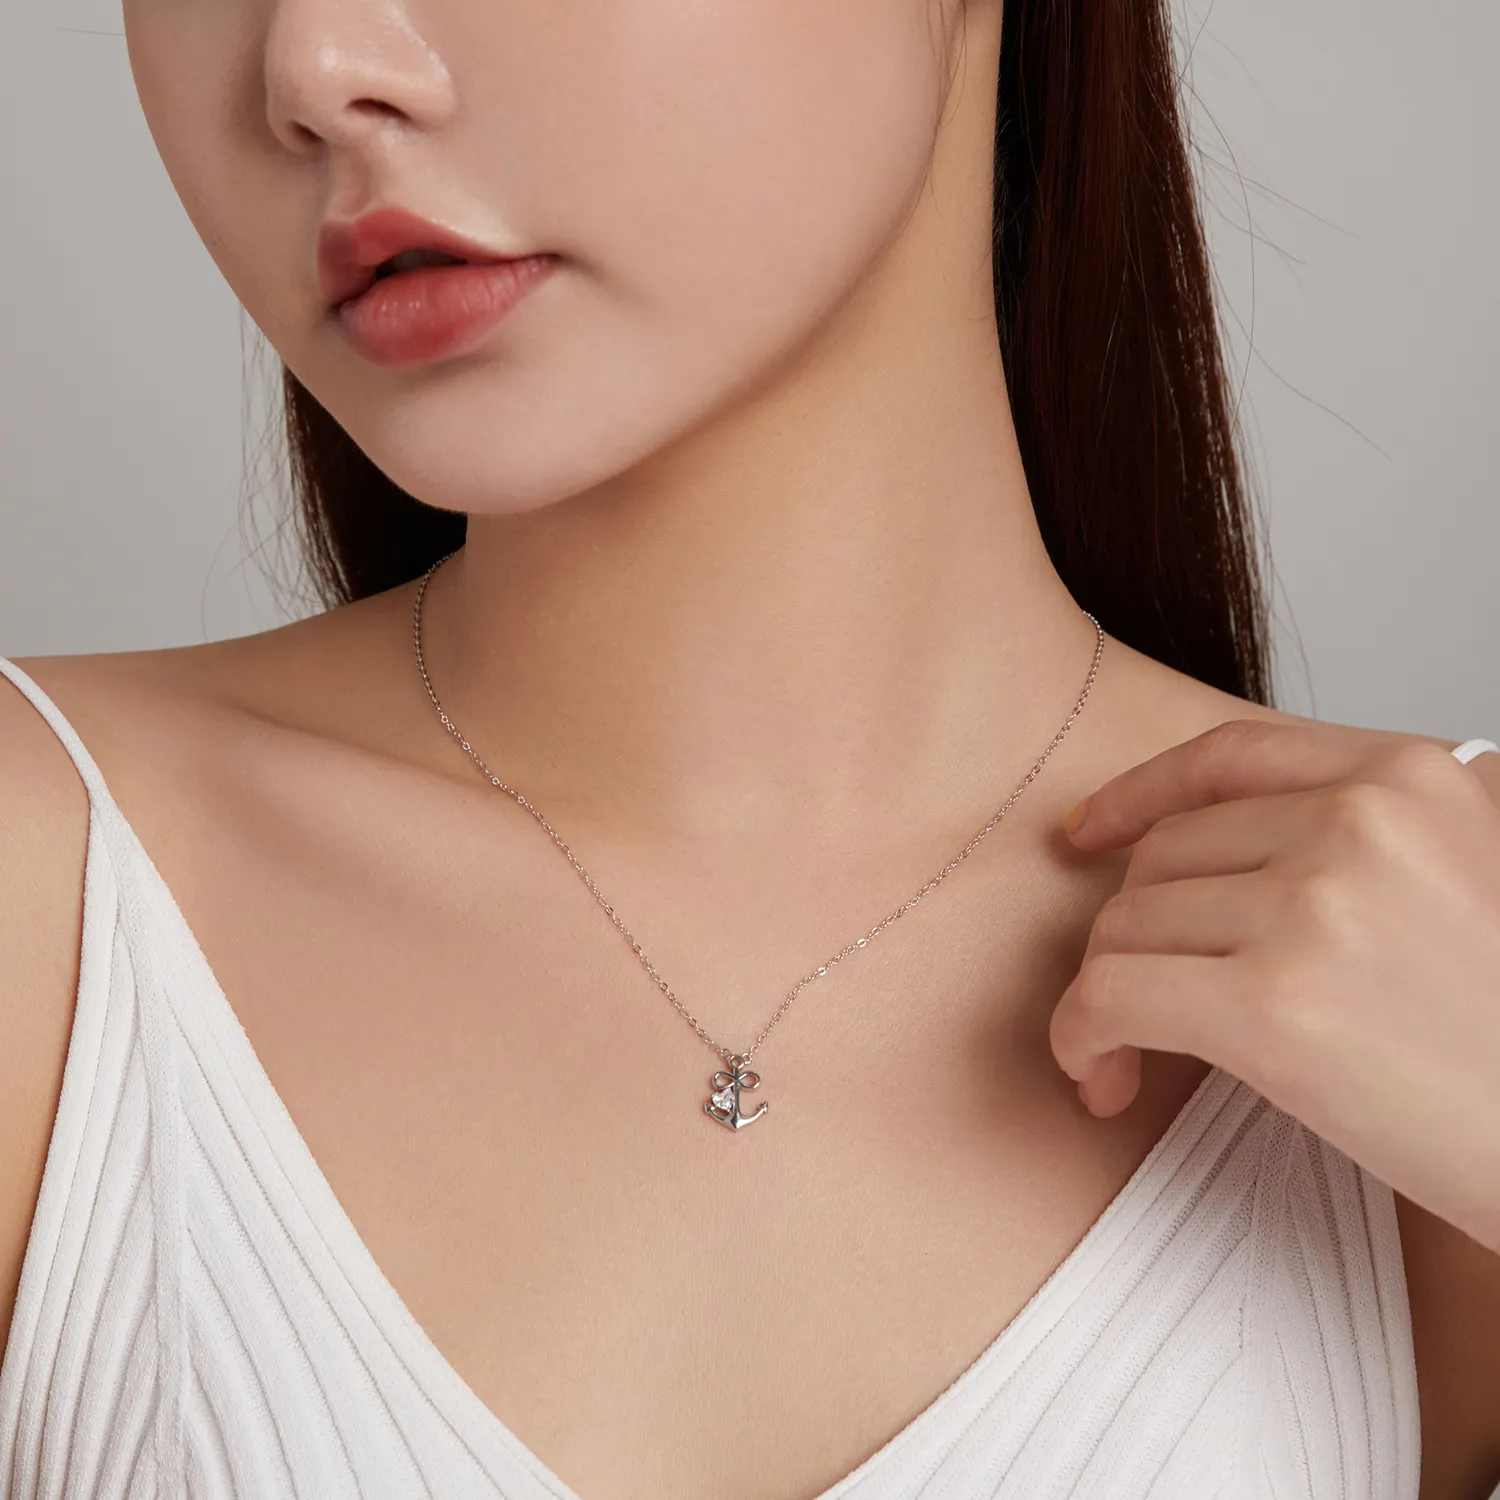 Pandora Style Silver Loyal Love Pendant Necklace - SCN458